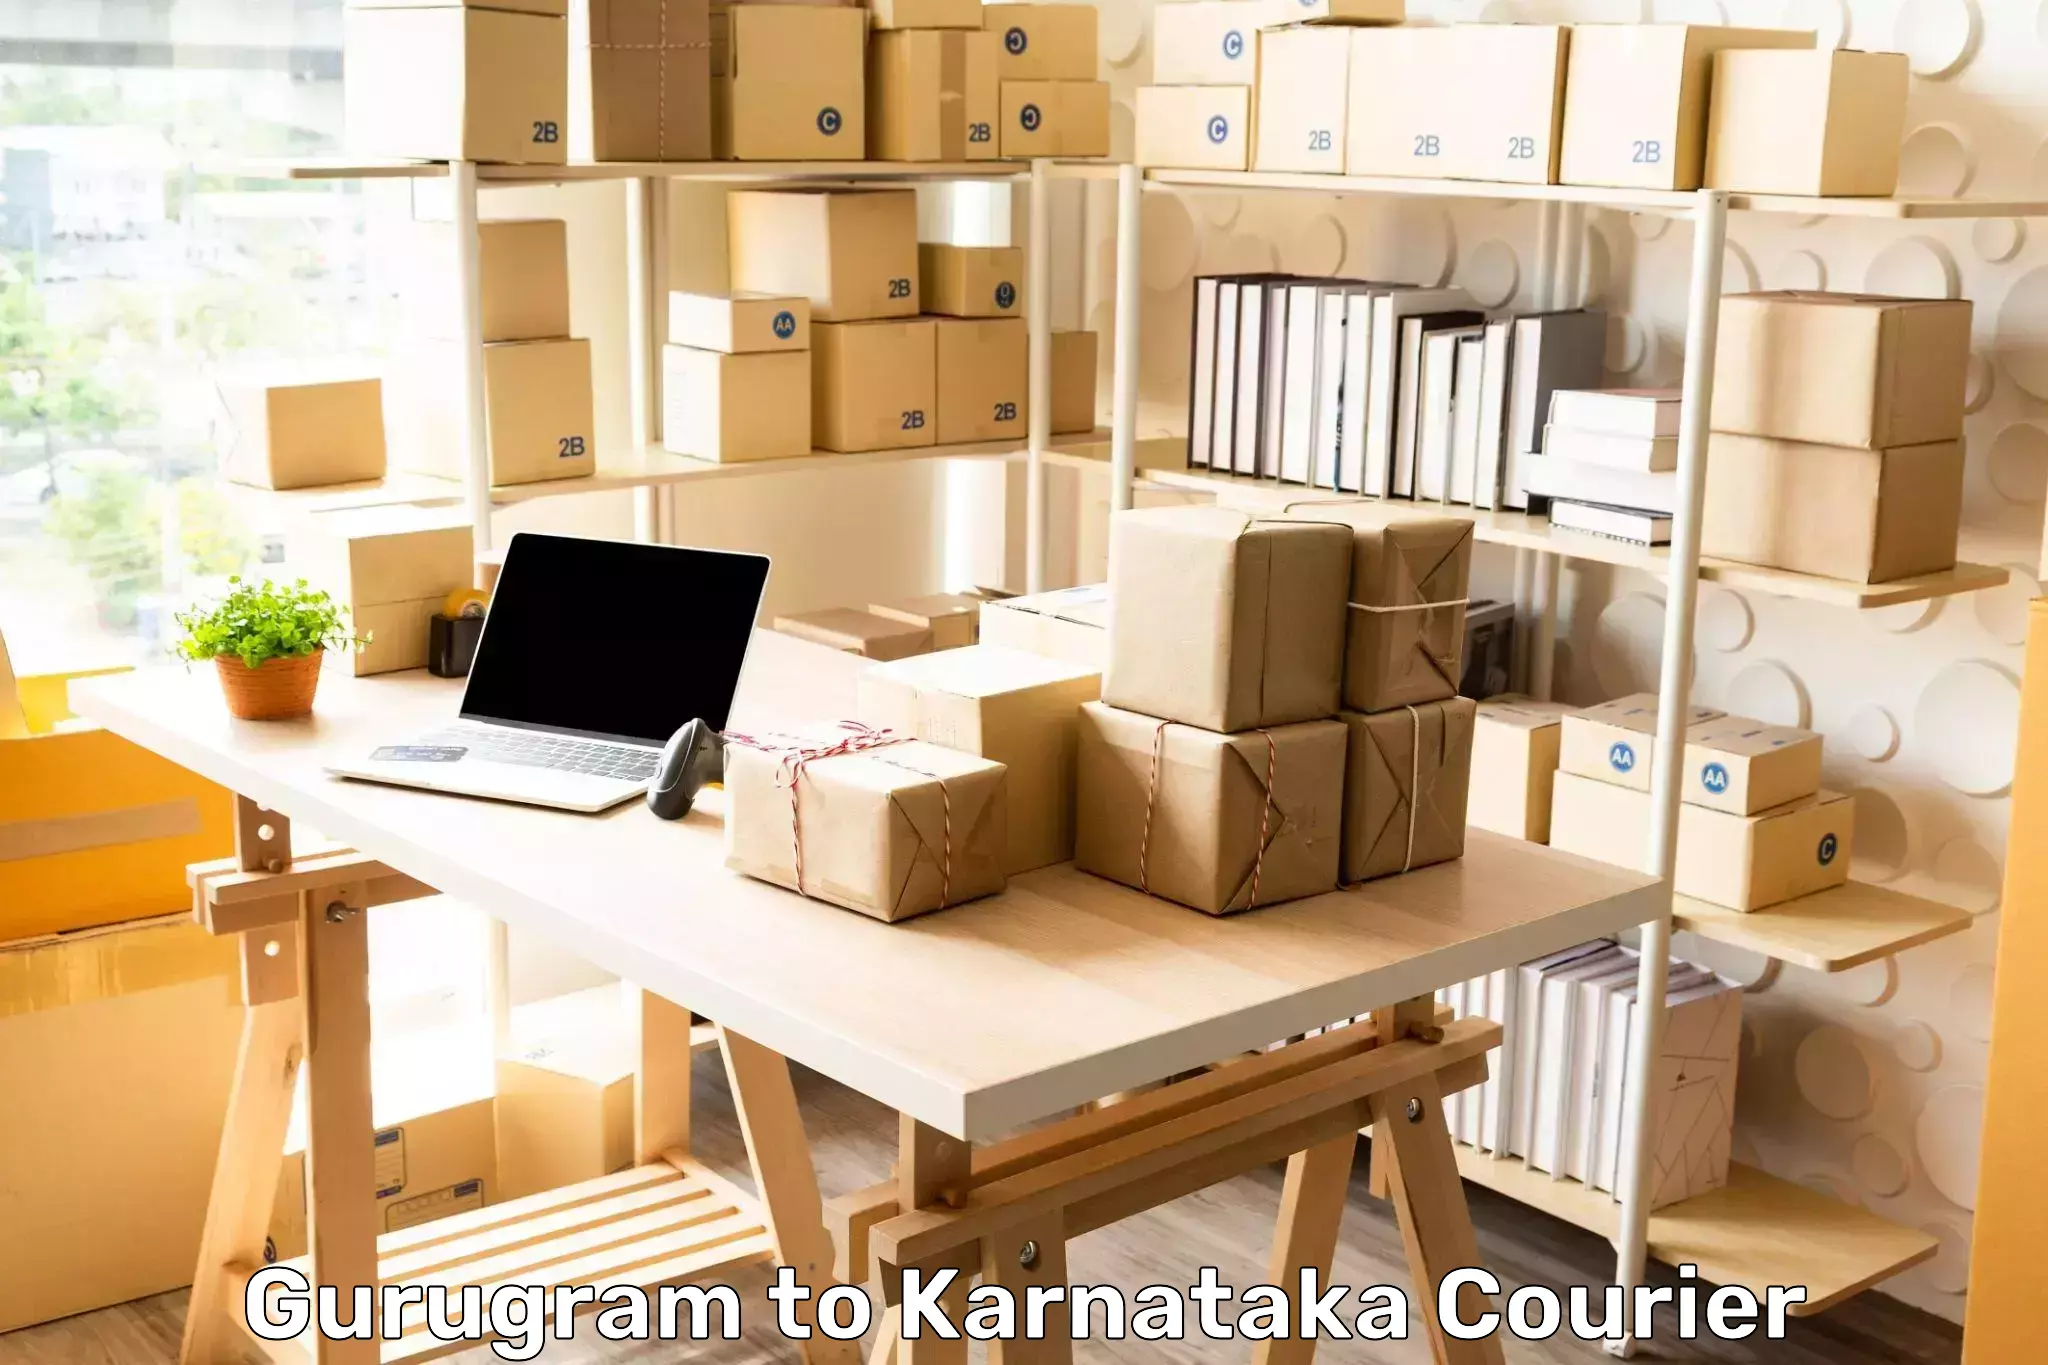 End-to-end delivery Gurugram to Karnataka